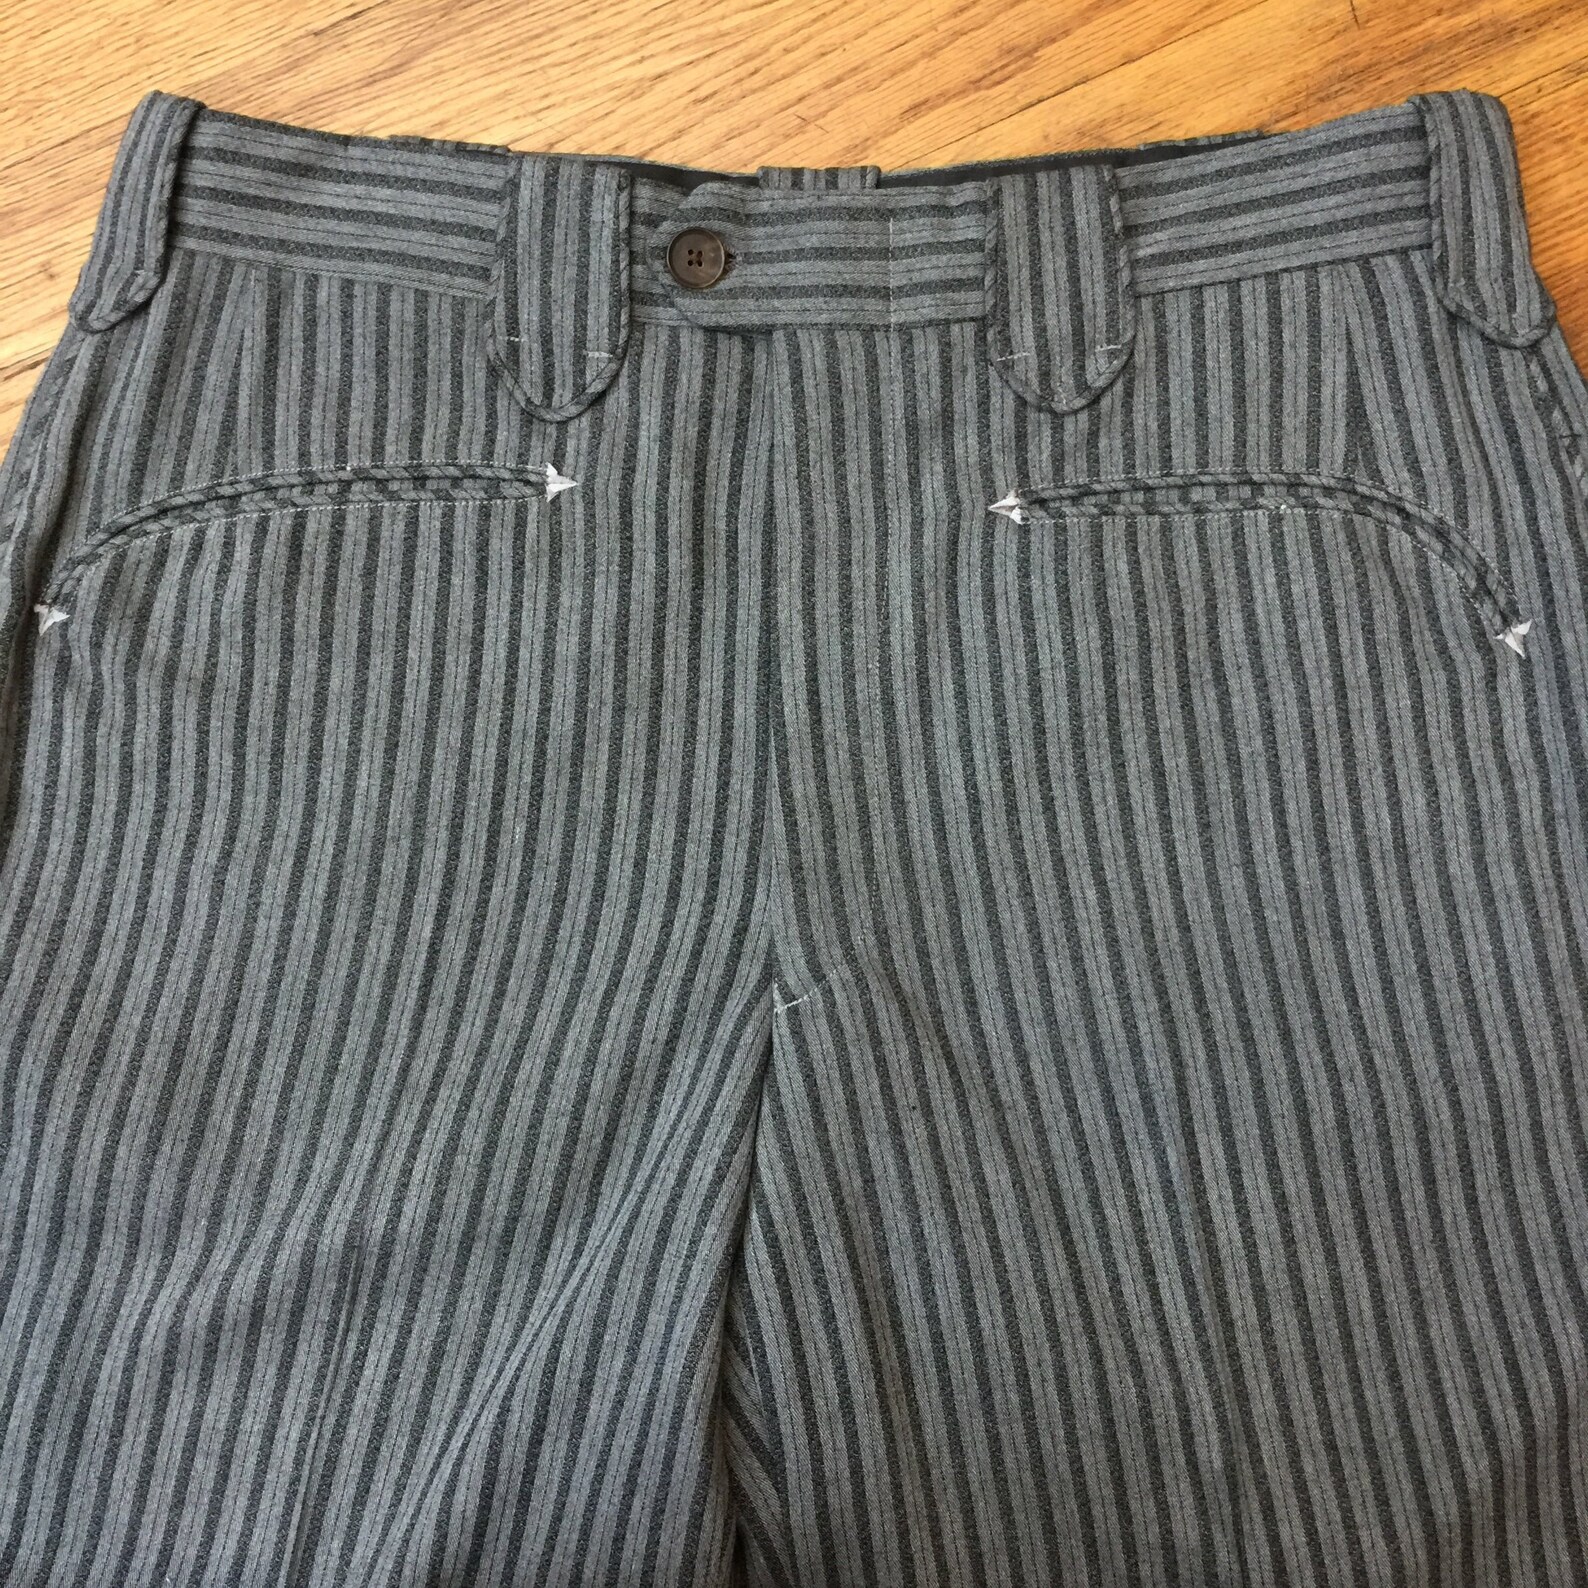 Gamblers stripe western pants Cad Zoots striped wool slacks | Etsy